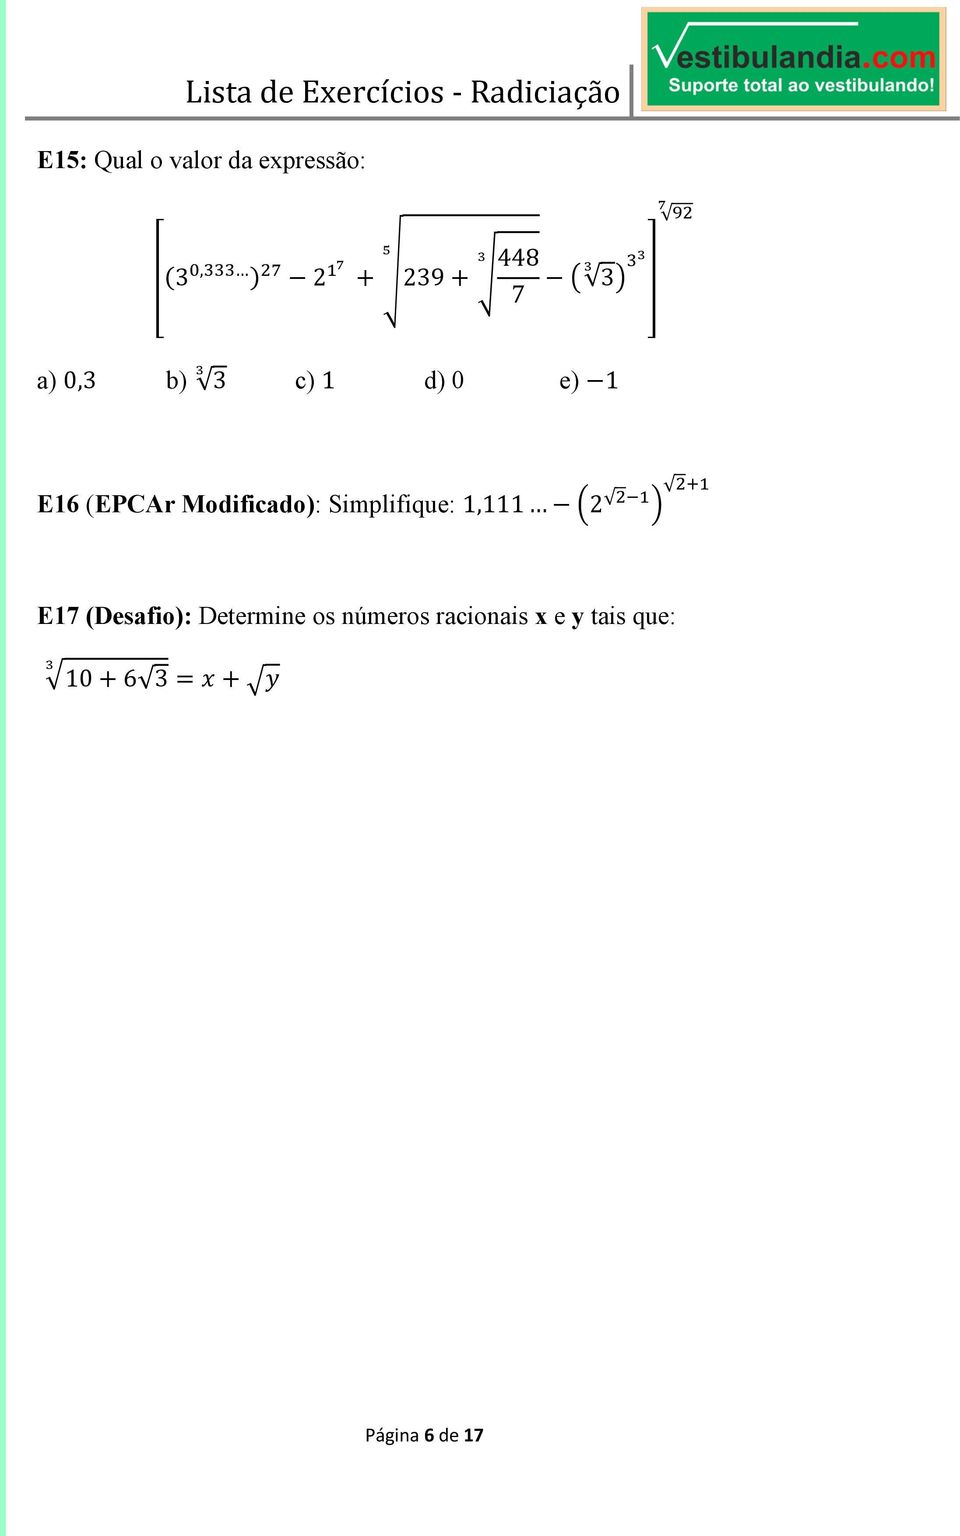 0 e) 1 E16 (EPCAr Modificado): Simplifique: 1,111 K2 L * E17